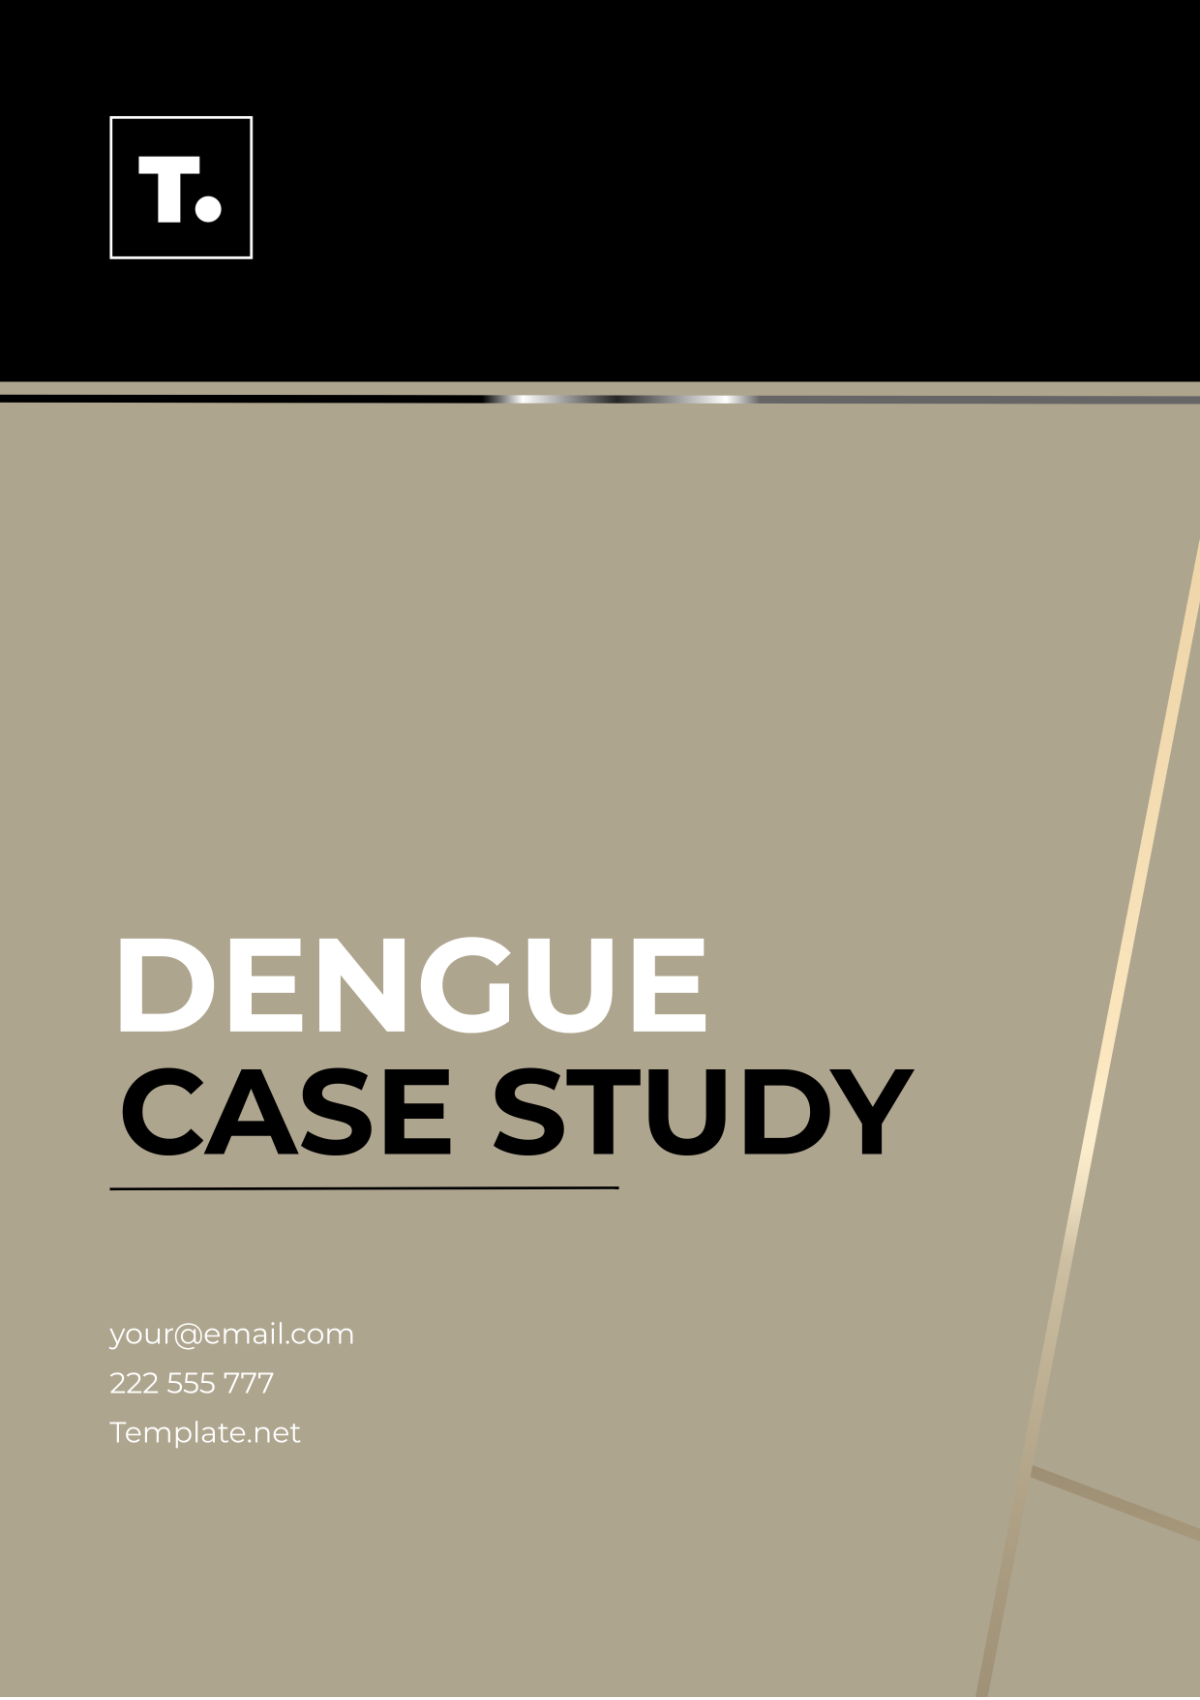 Dengue Case Study Template